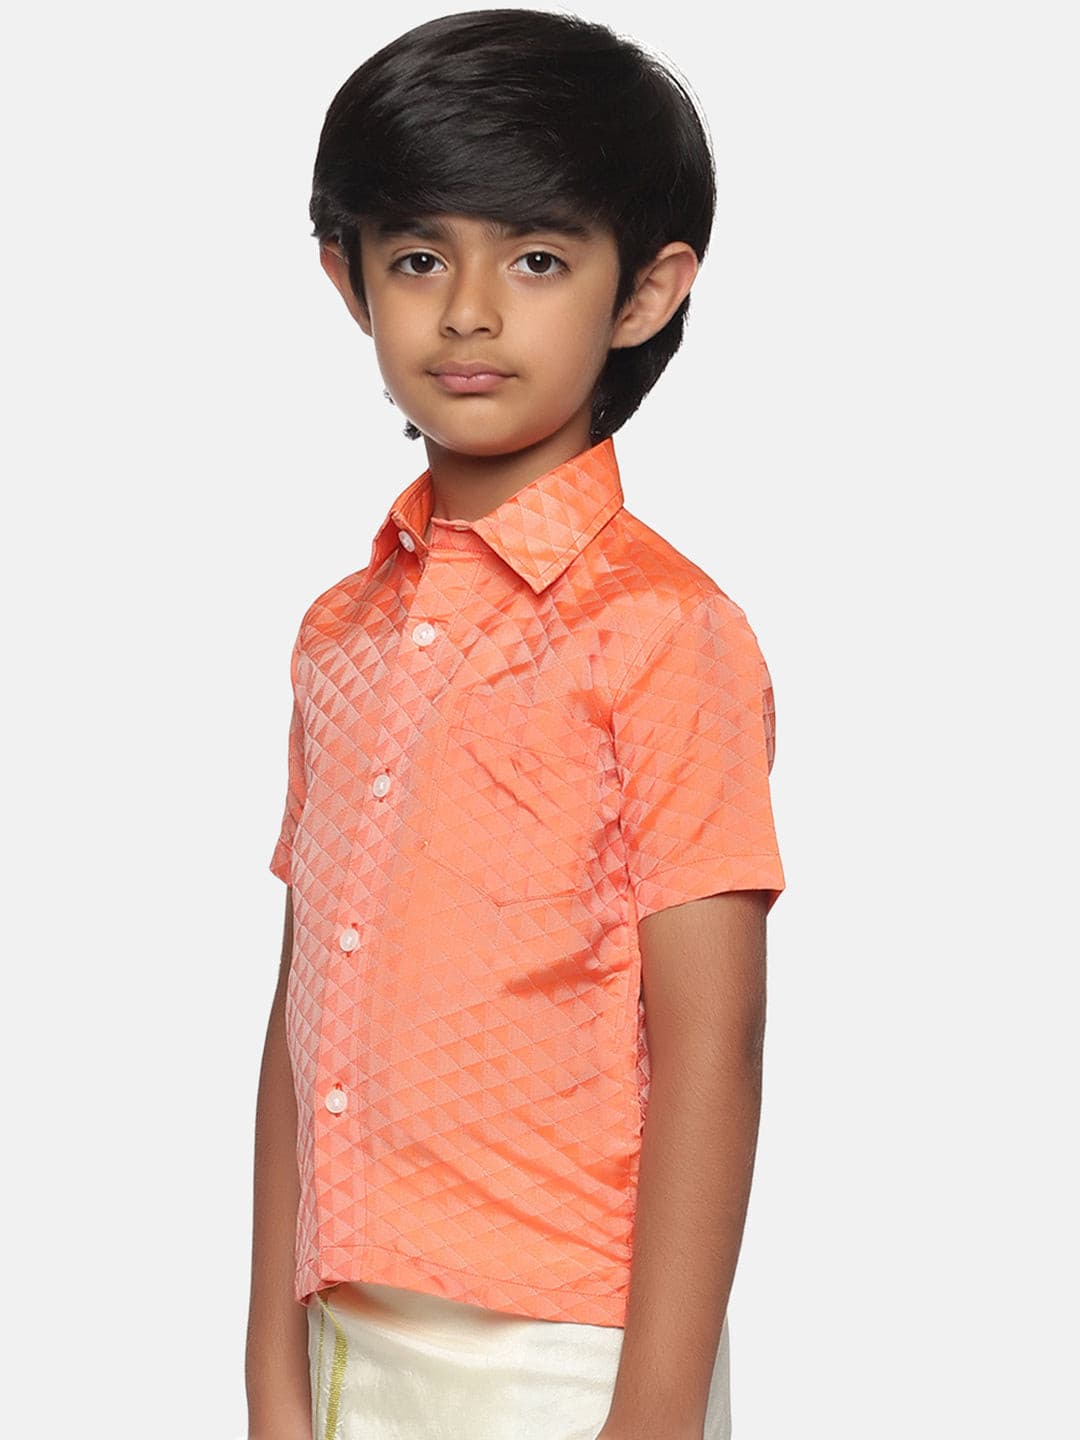 Boys Orange Colour Art Silk Shirt.